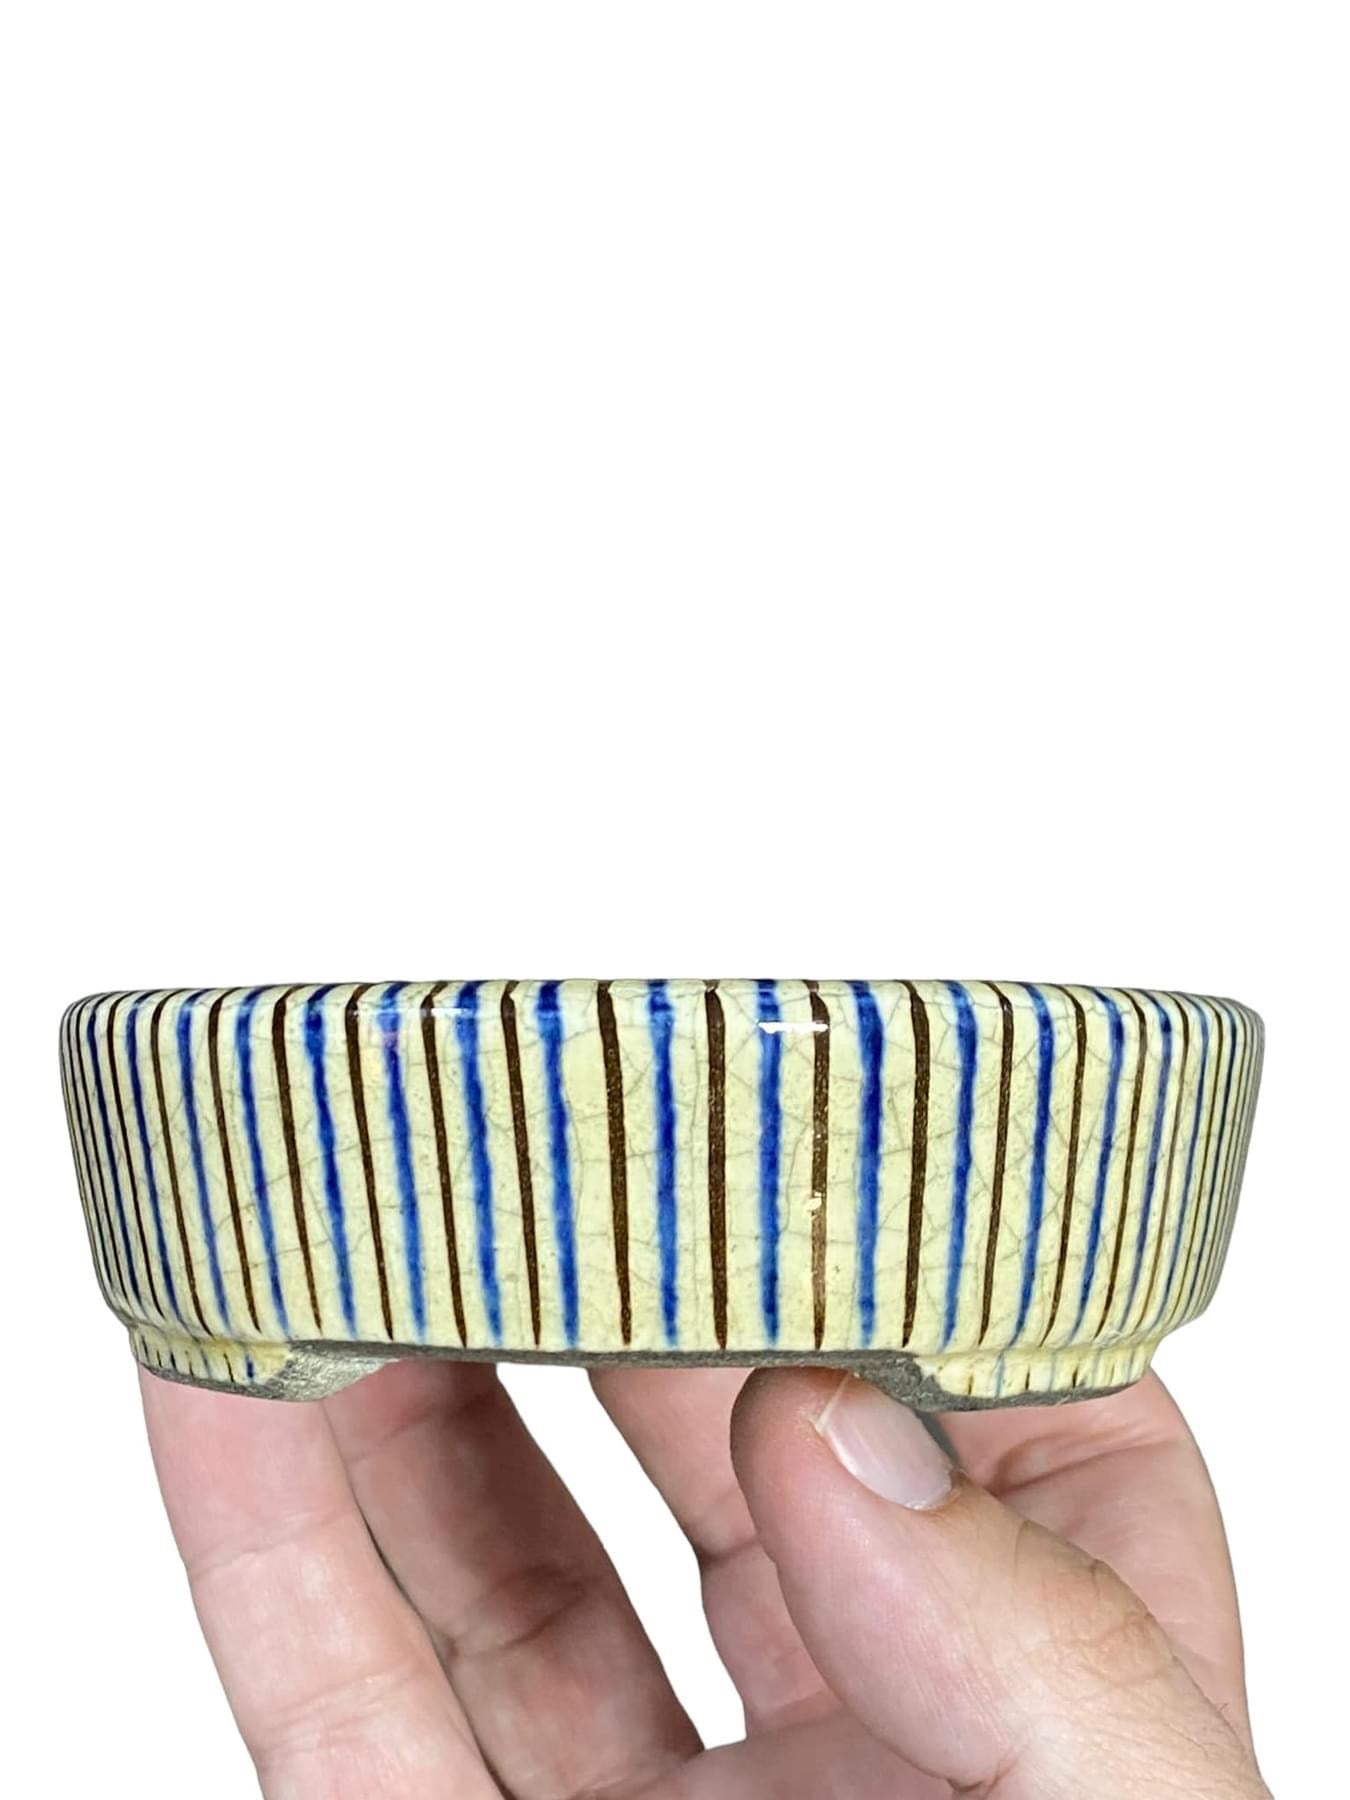 Satomi Terahata - Wonderful Crackle Glazed and Striped Bonsai Pot (5-1/8” wide)